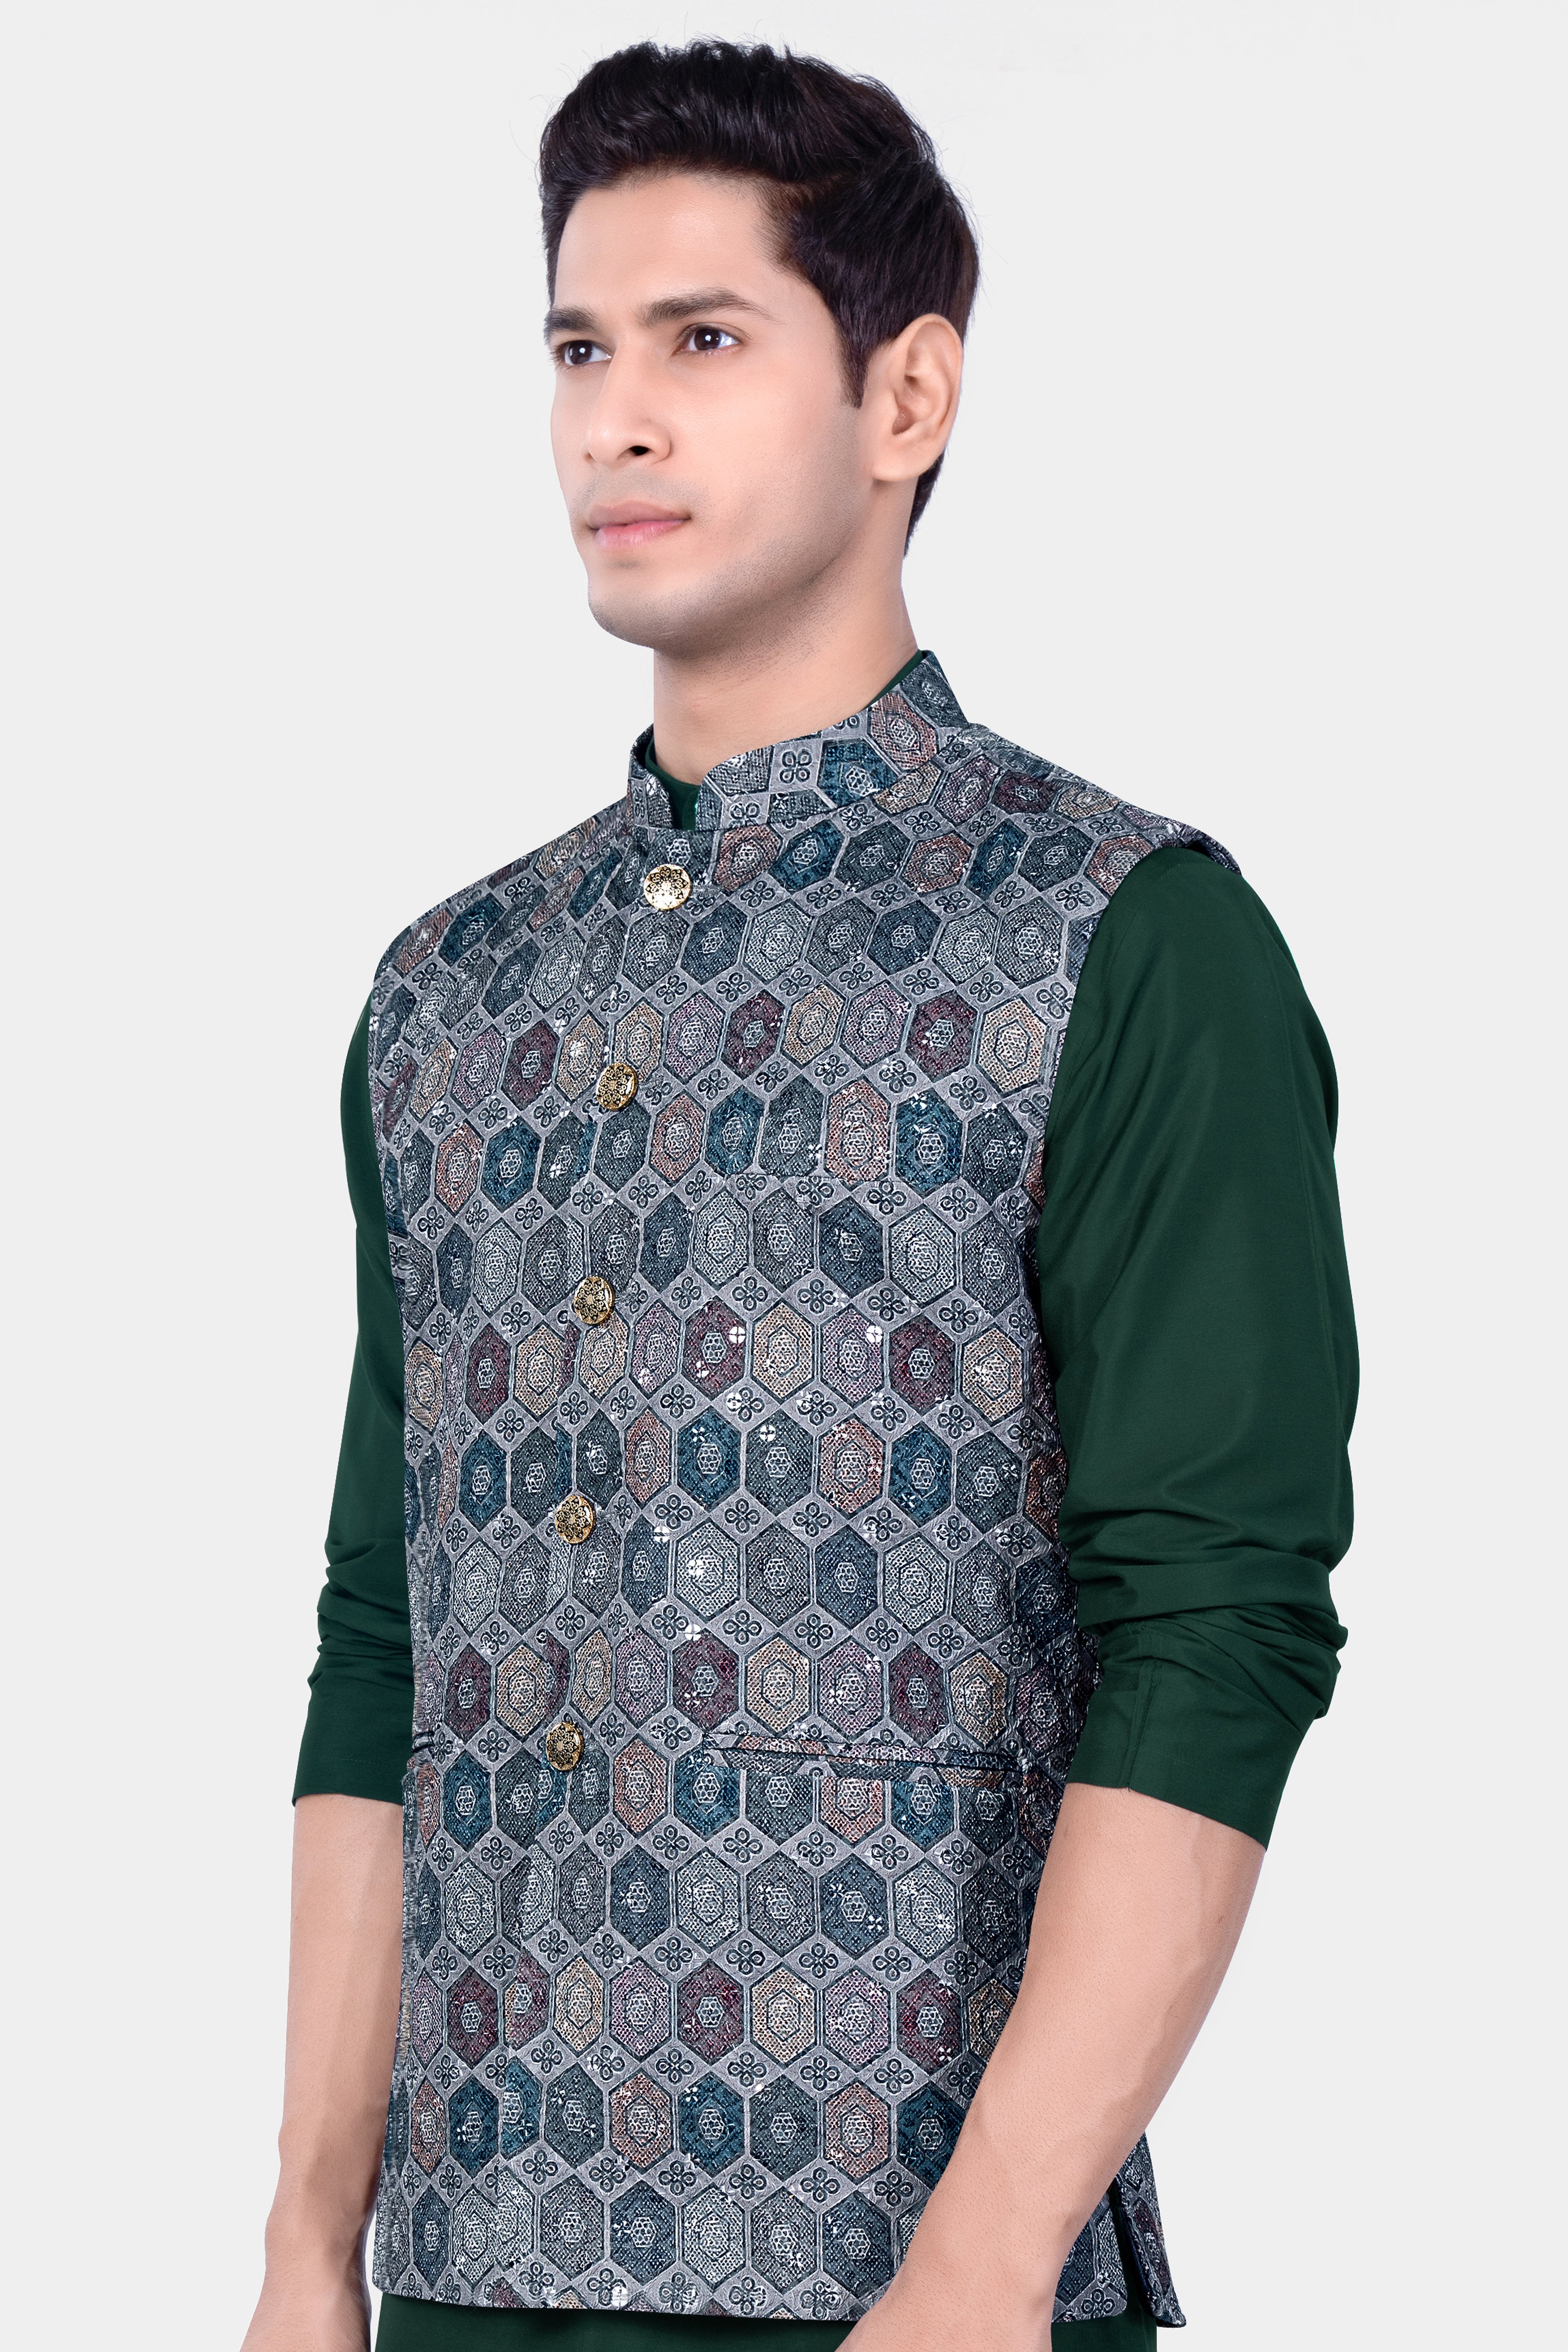 Tuna Blue And Gunsmoke Gray Multicolour Embroidered Nehru Jacket